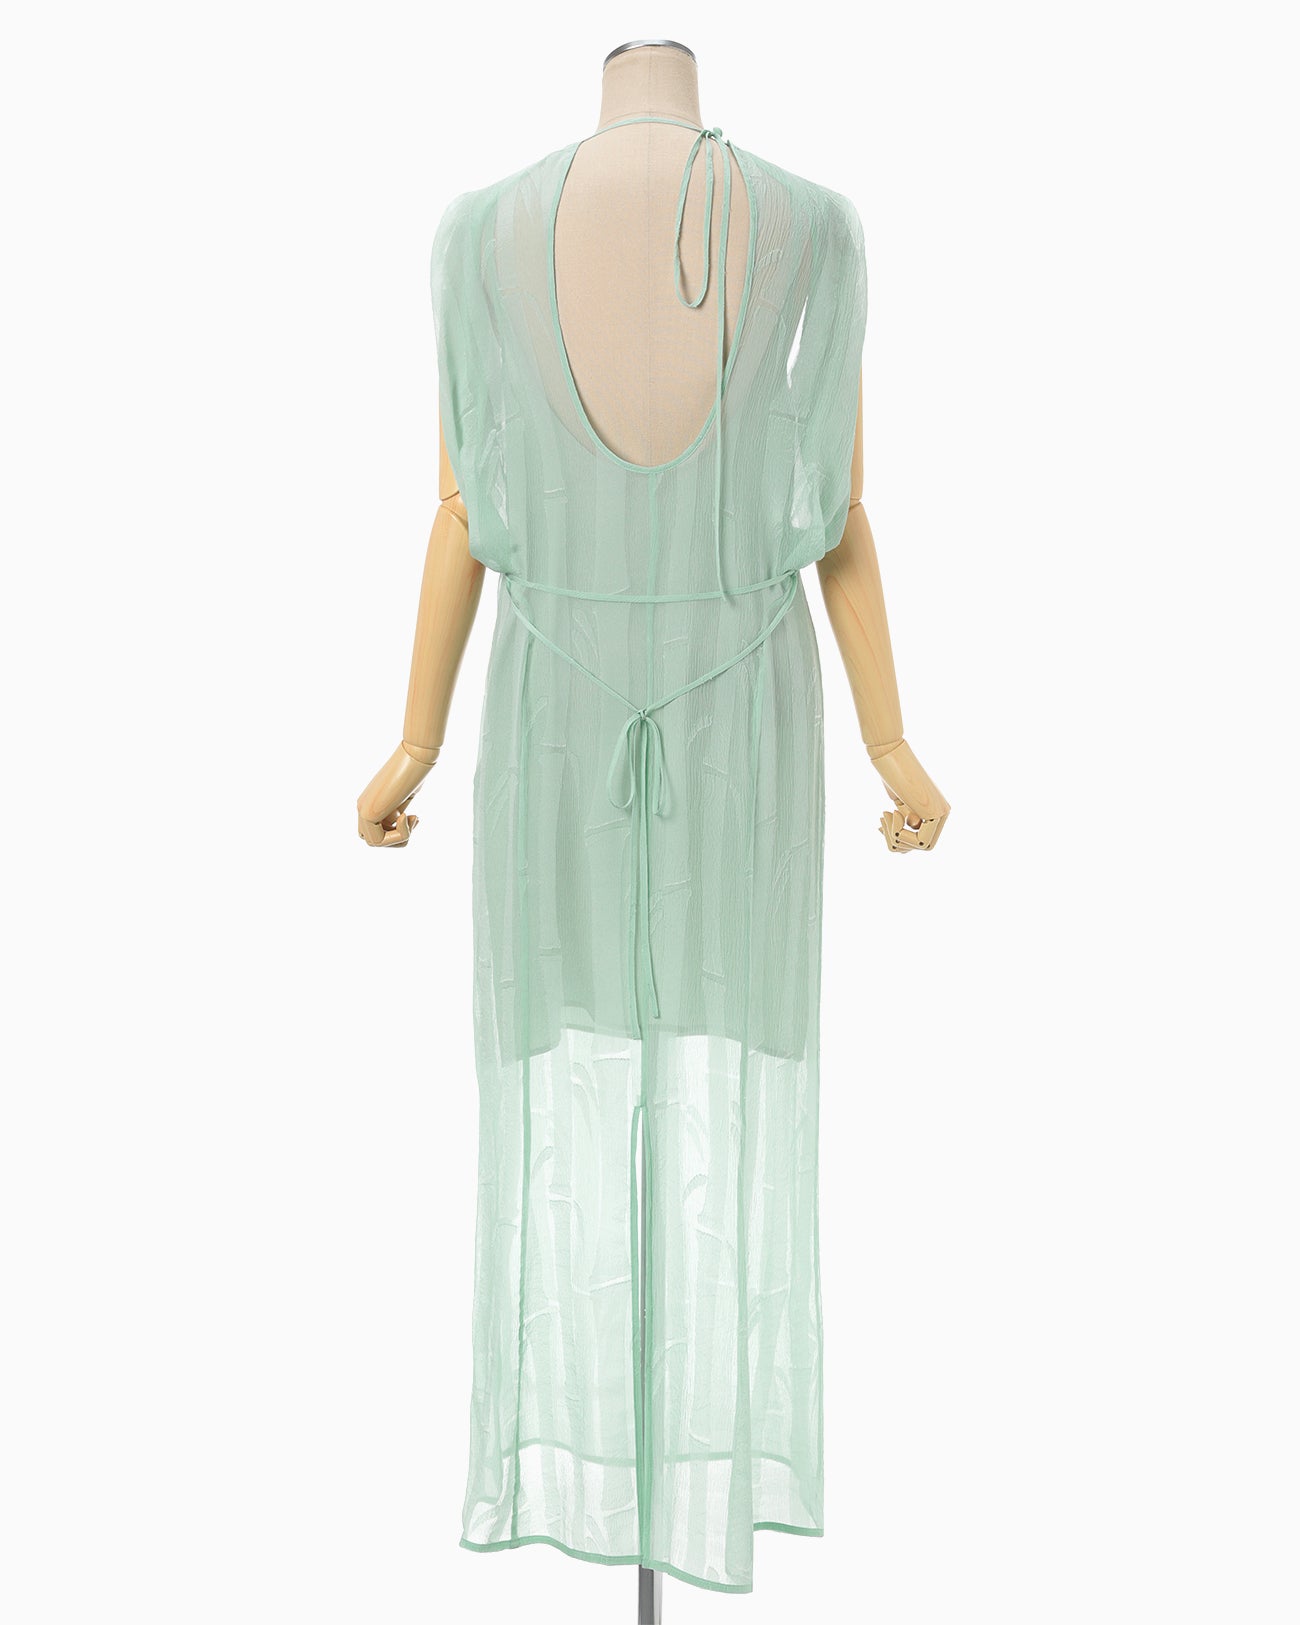 Bamboo Motif Willow Jacquard Sheer Dress - mint green - Mame 